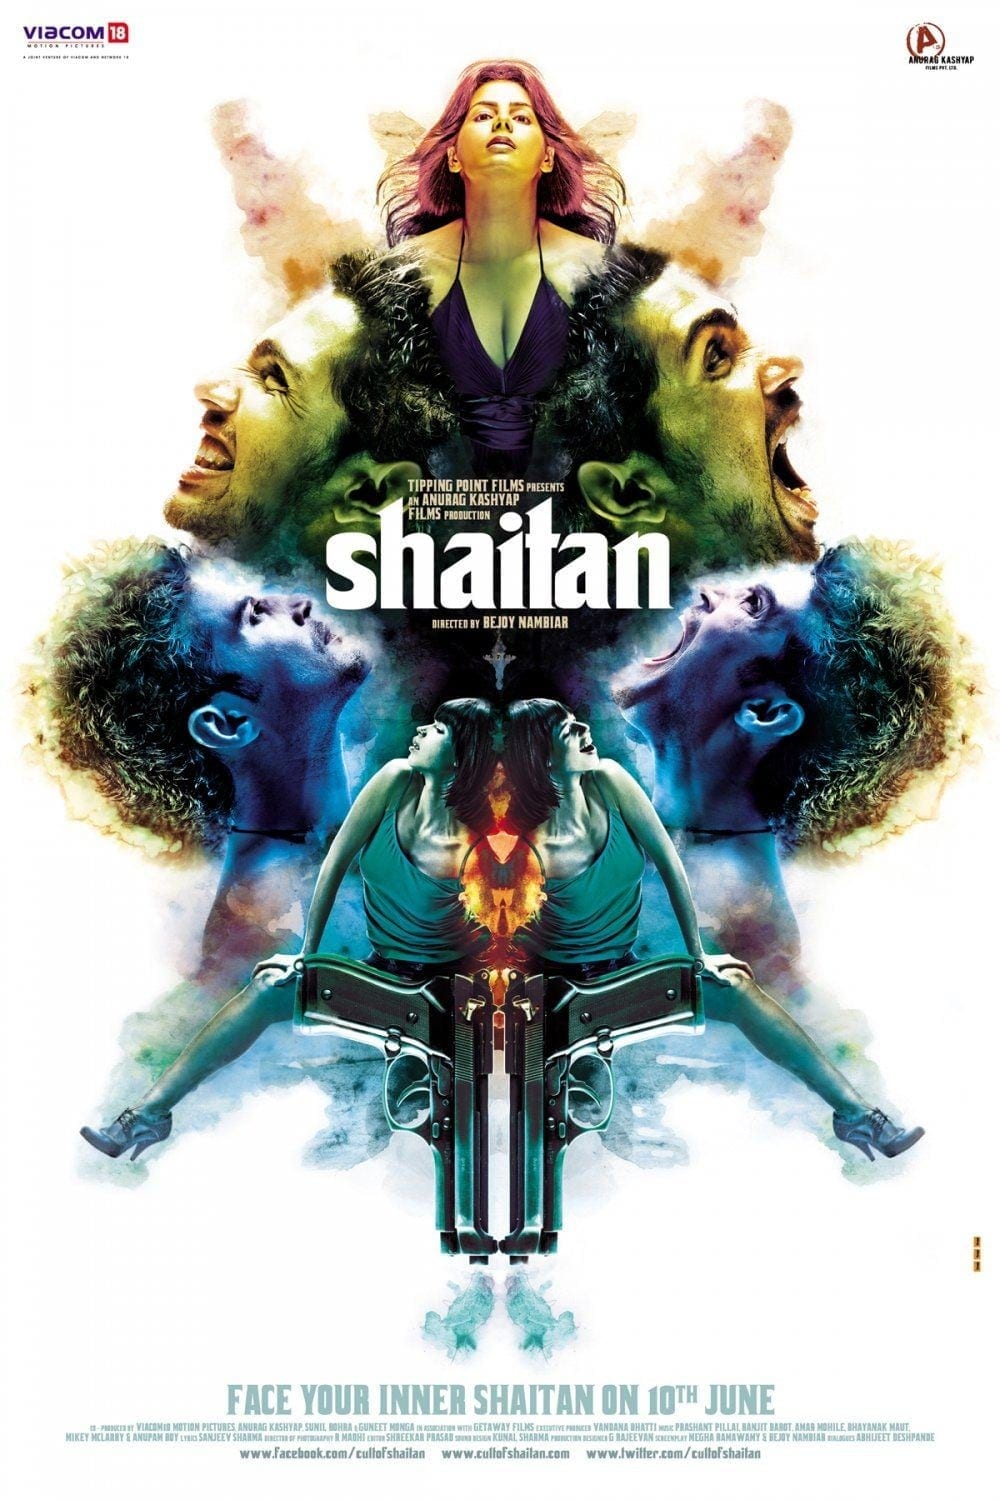 Poster for the movie "Shaitan"